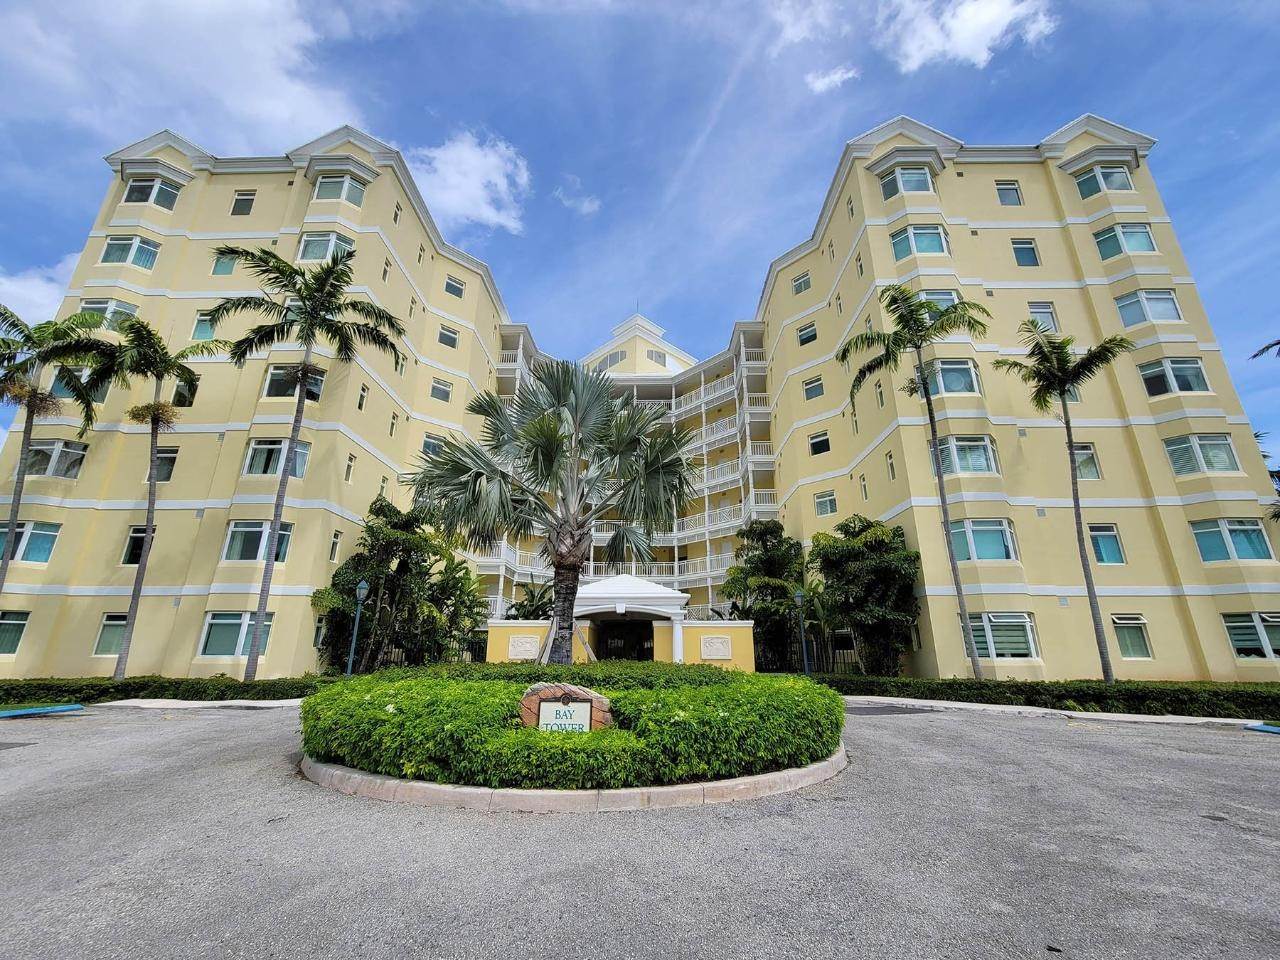 14. Condominiums at Cable Beach, Nassau and Paradise Island, Bahamas